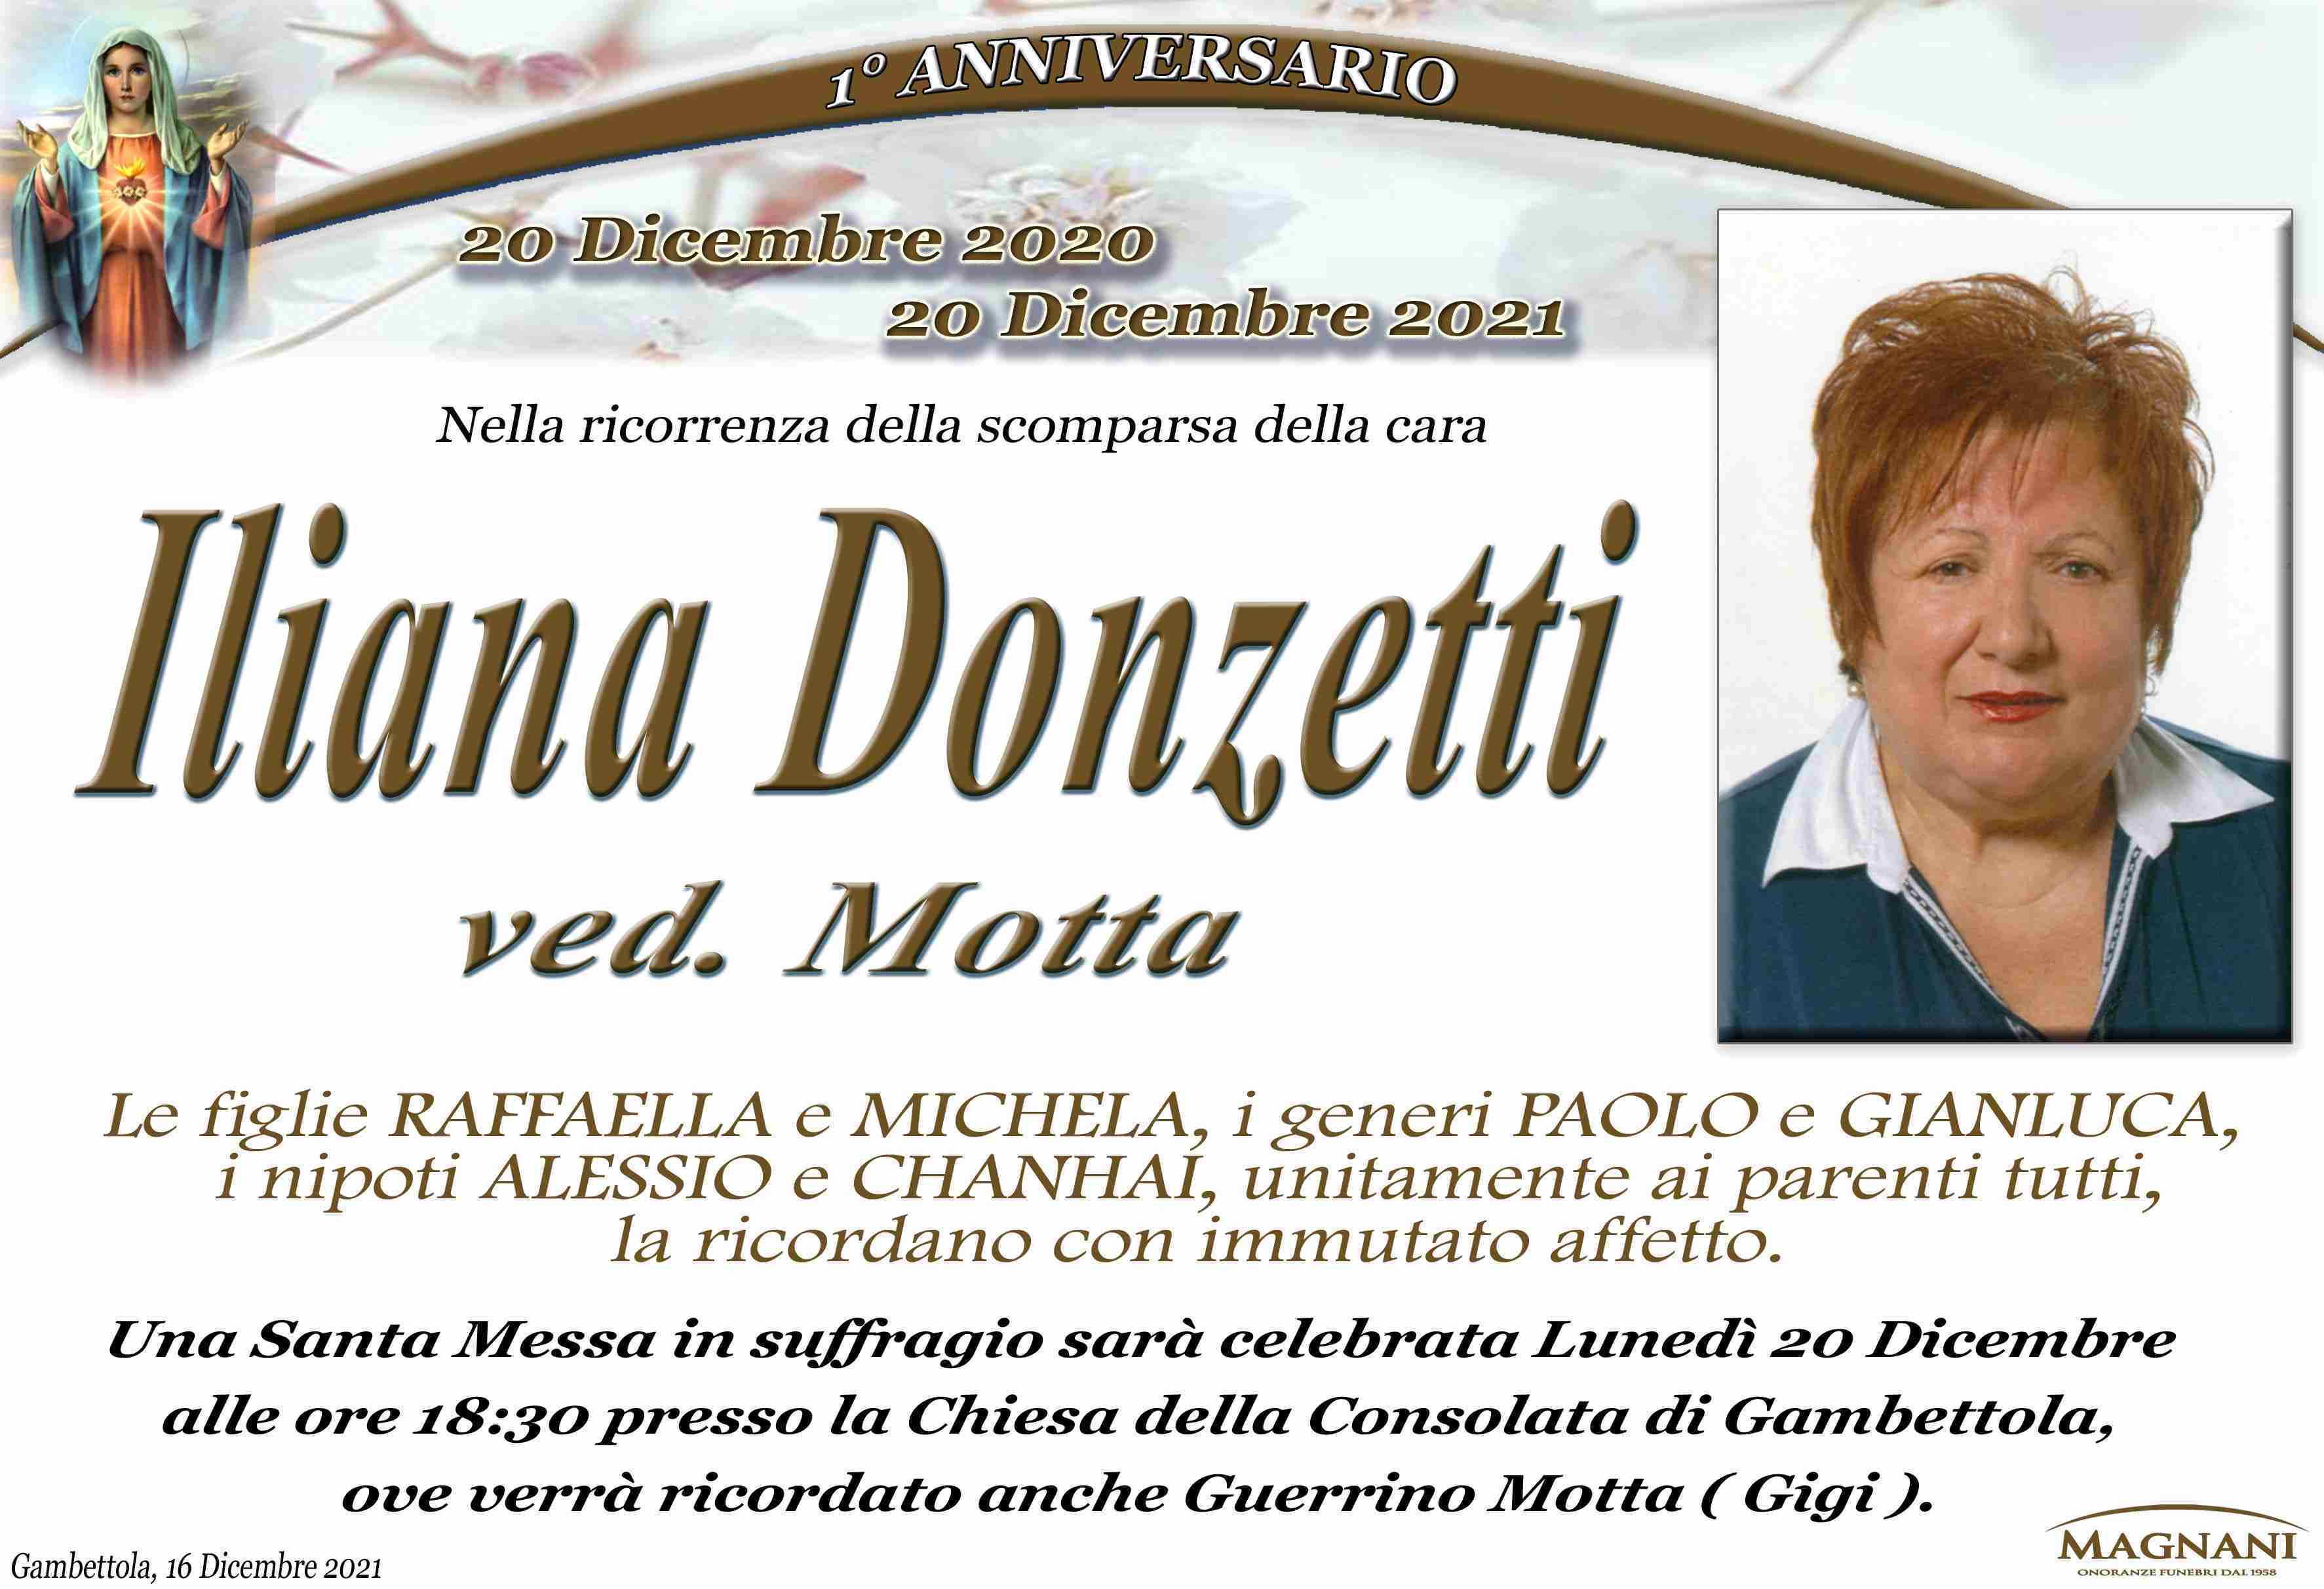 Iliana Donzetti